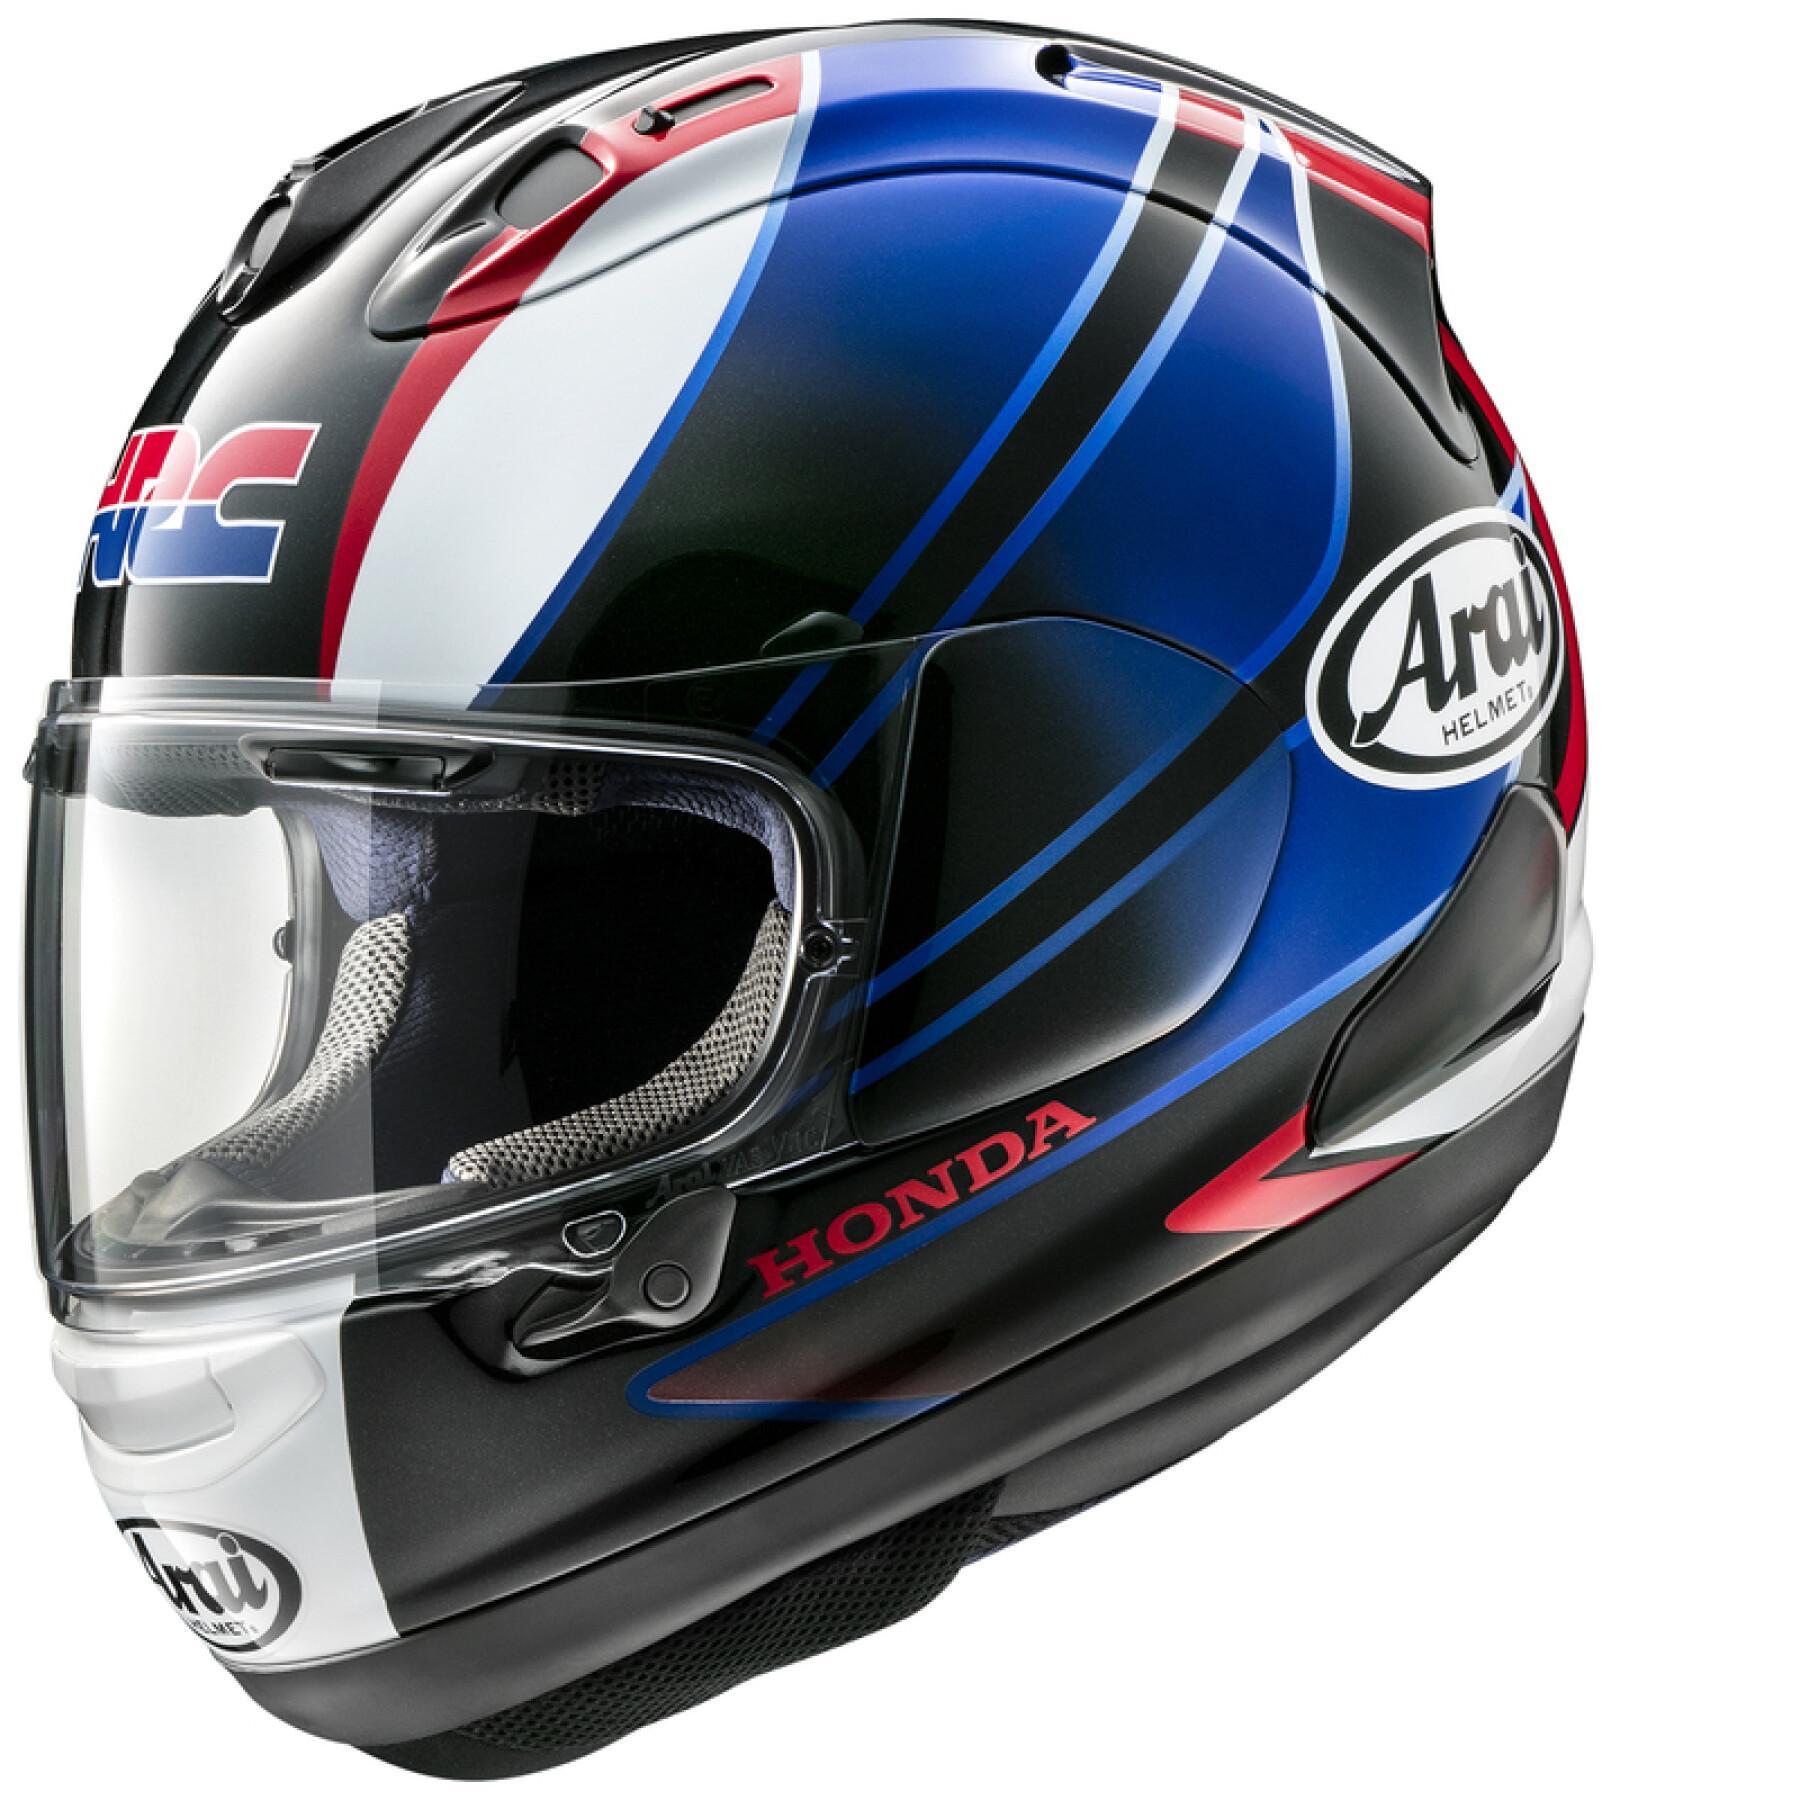 Full face motorcycle helmet Arai RX-7V EVO